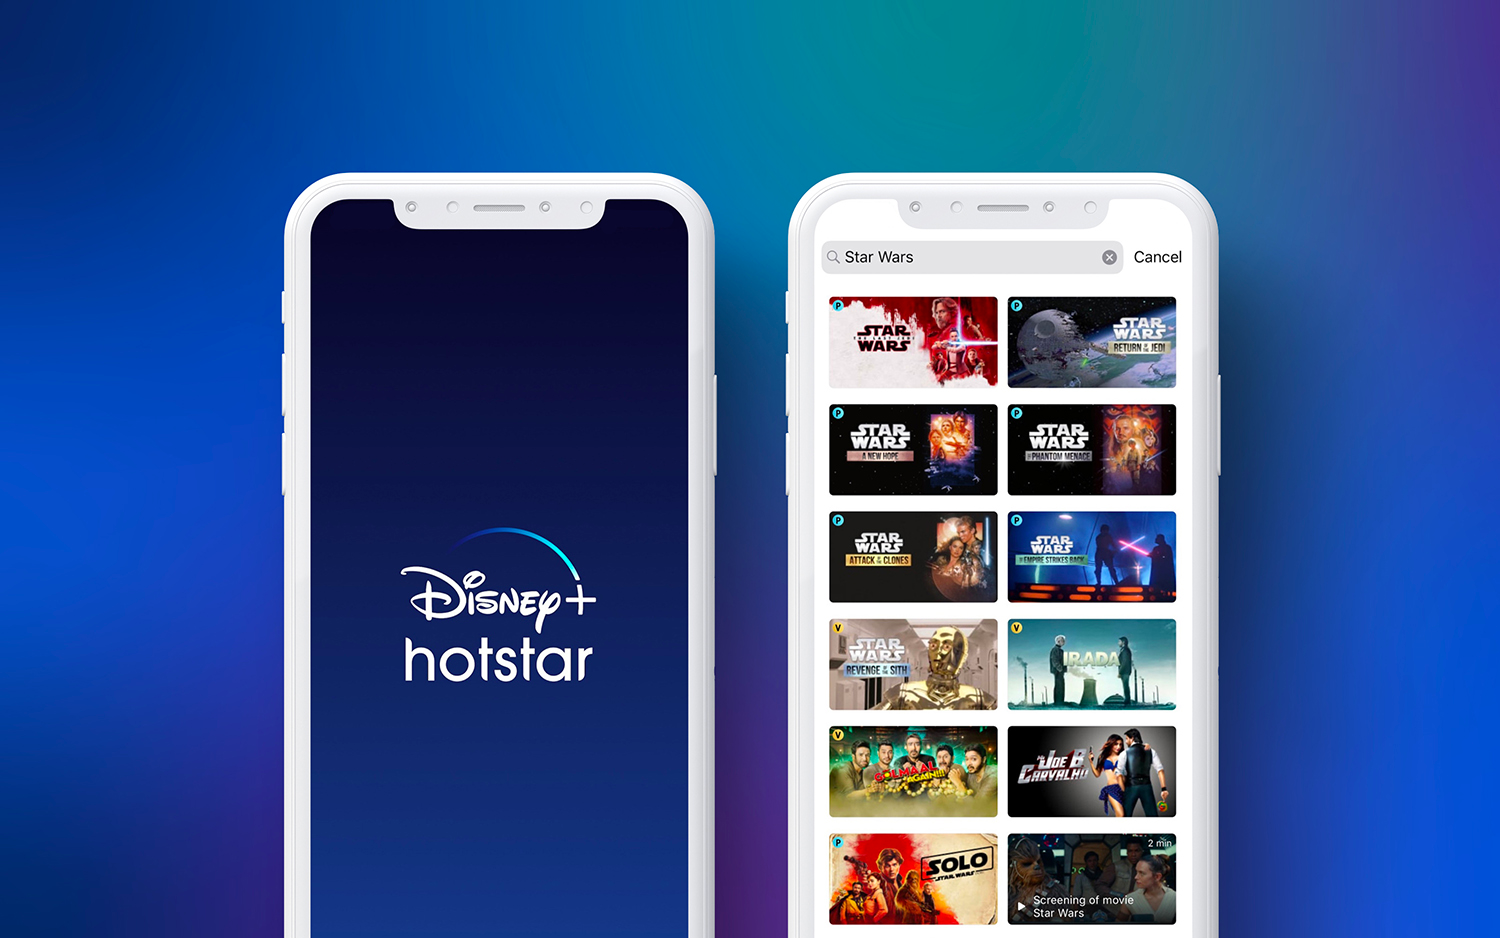 two smart phone screens displaying Disney-Hotstar splash and home screens